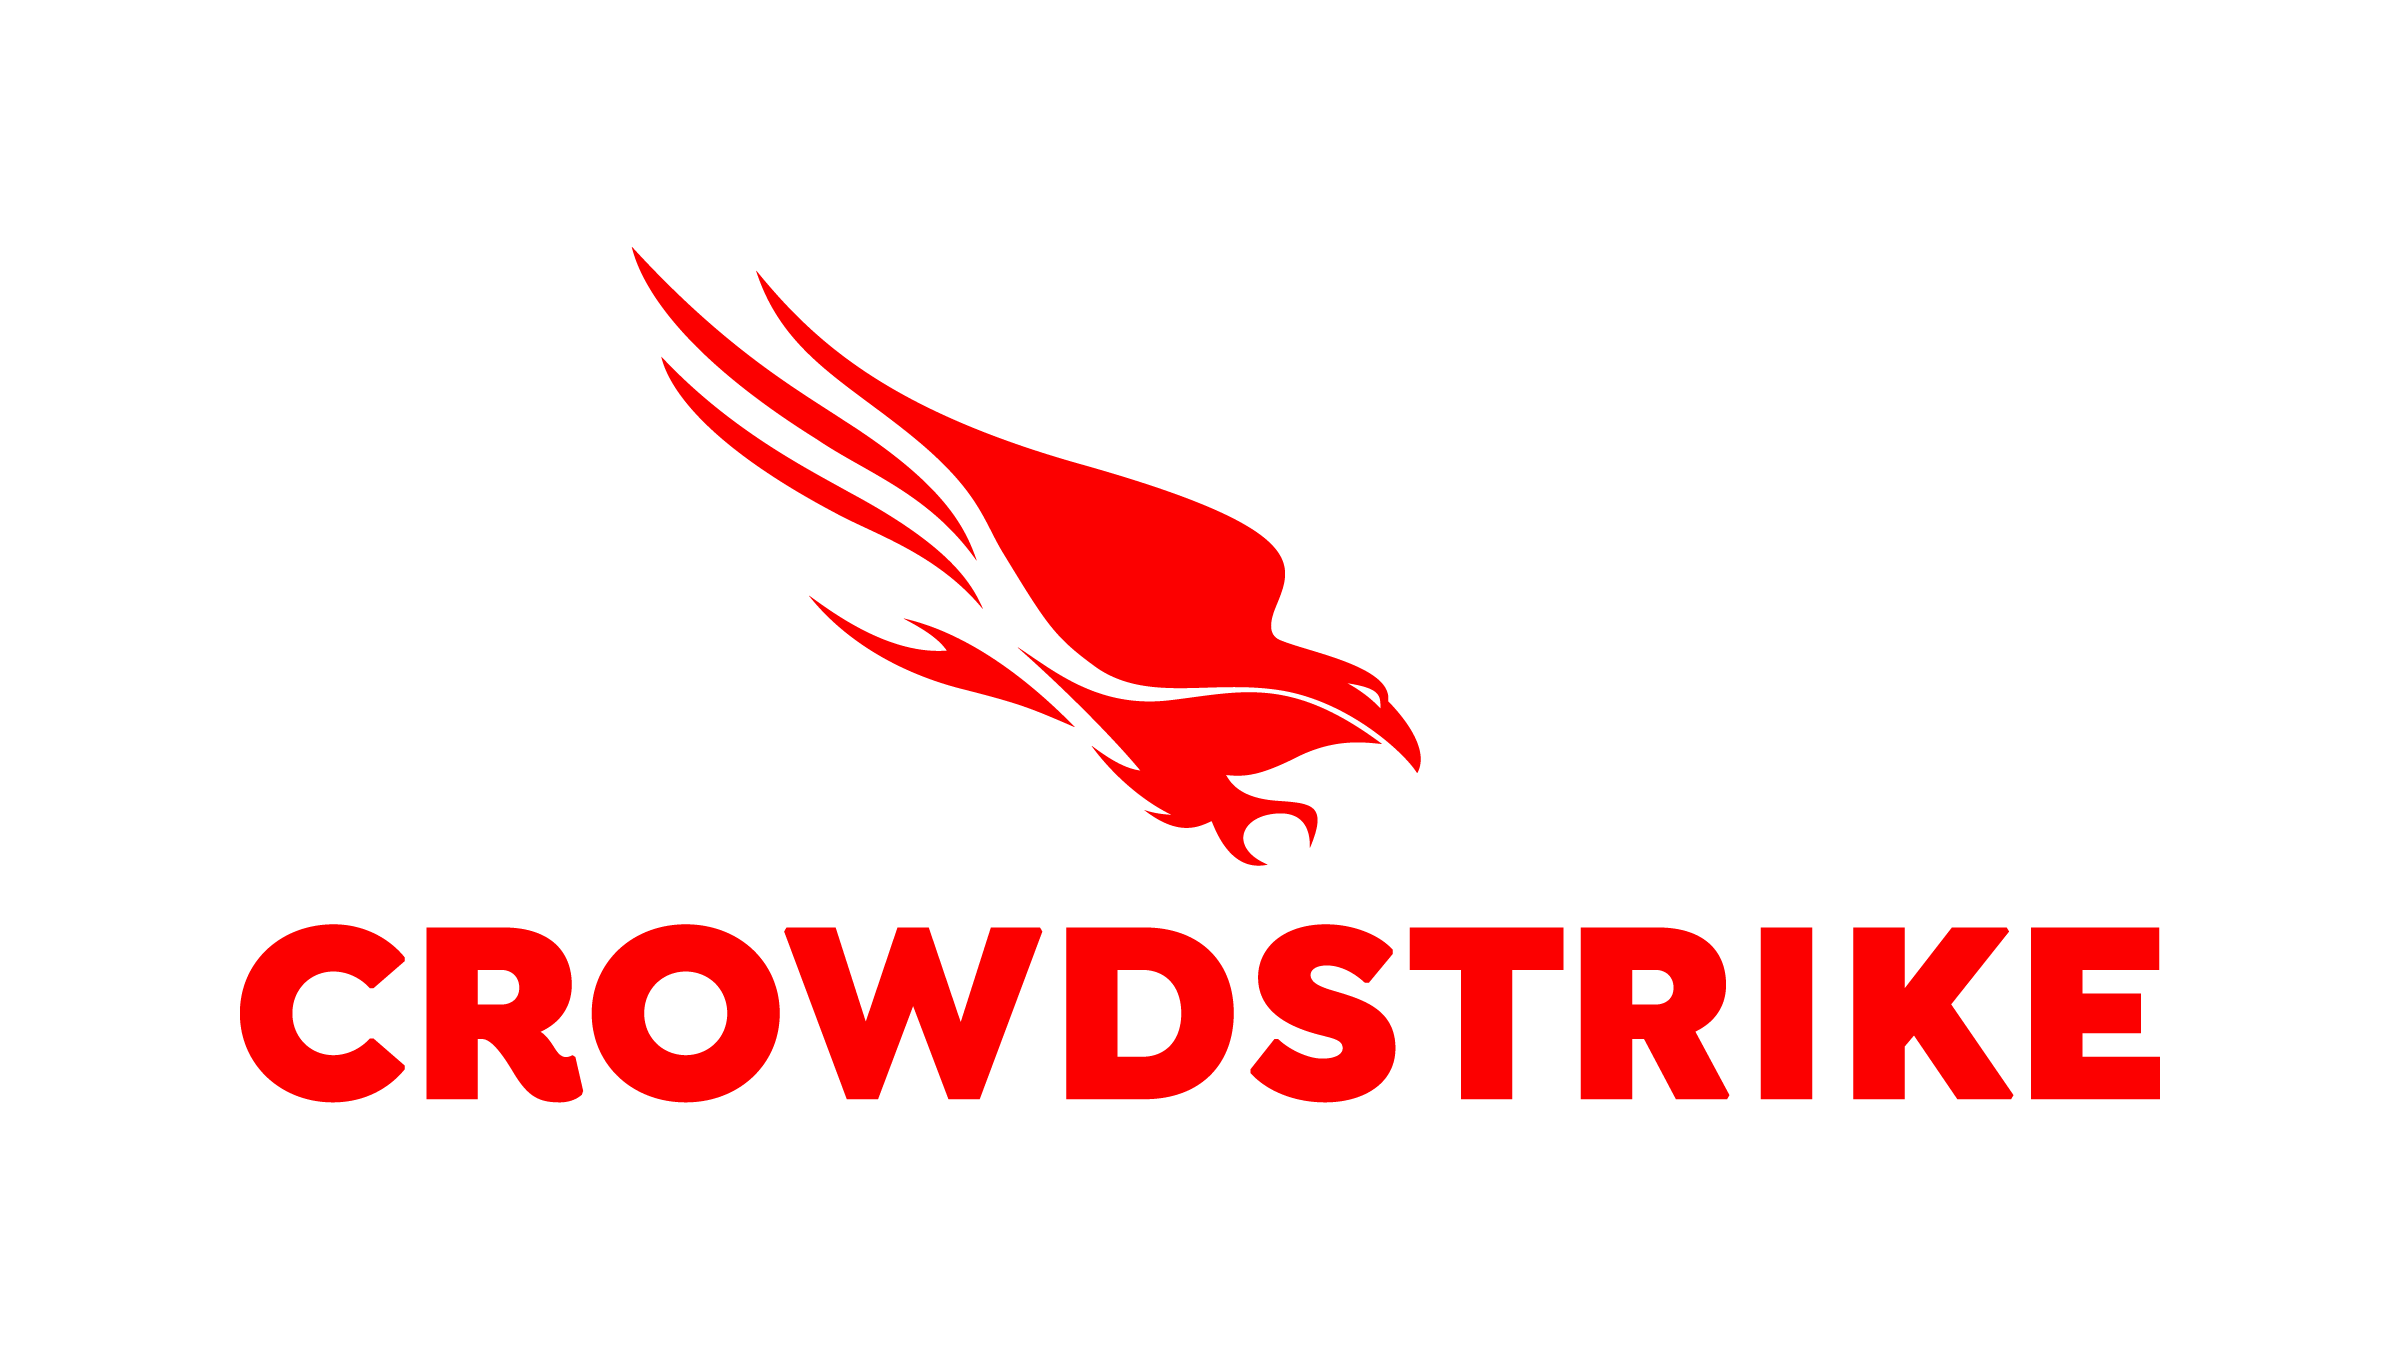 Red Crowdstrike logo